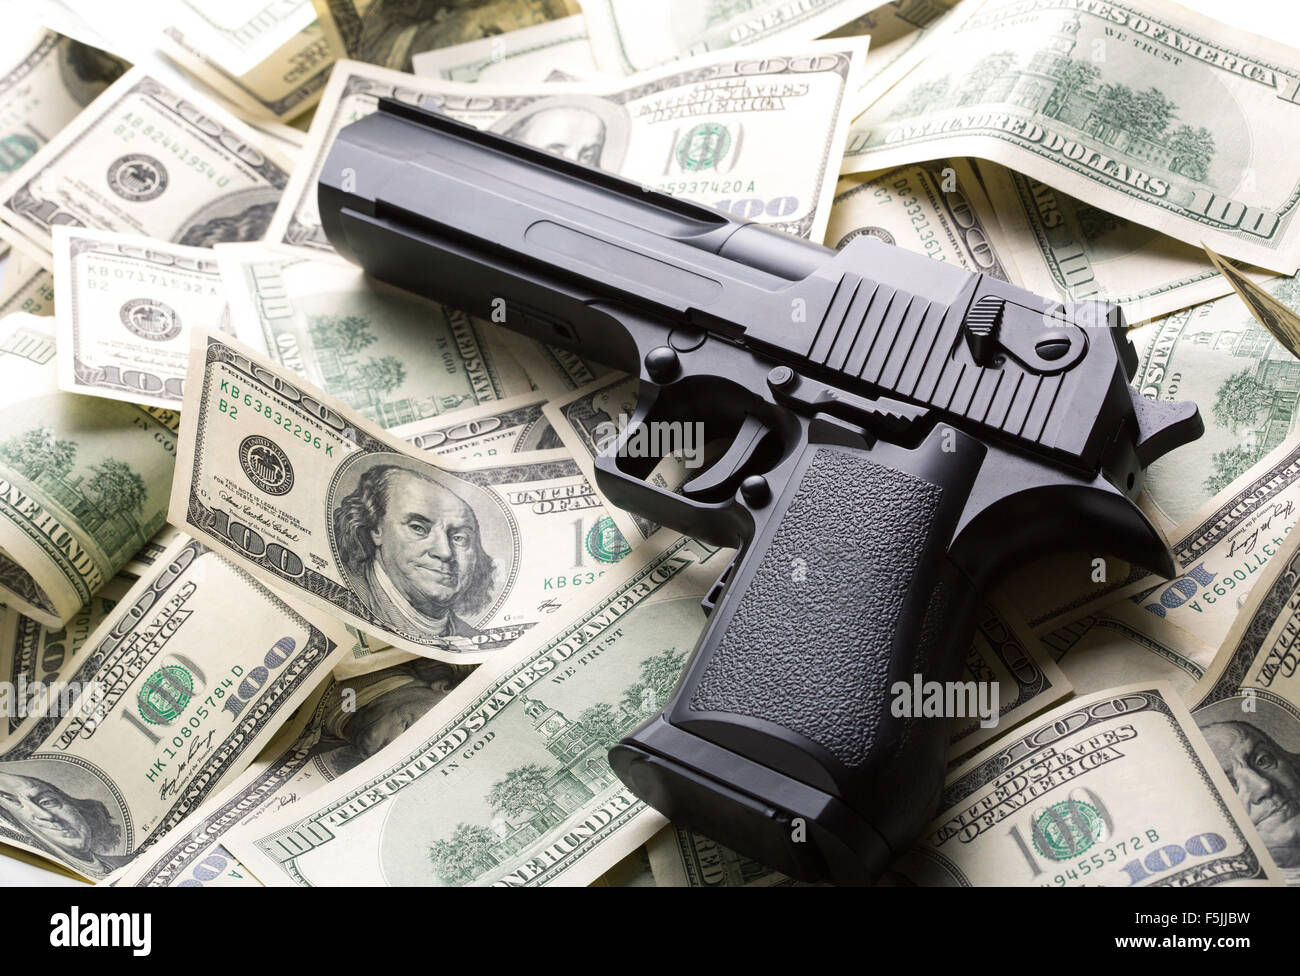 Heap of $100 dollar bills and handgun Stock Photo